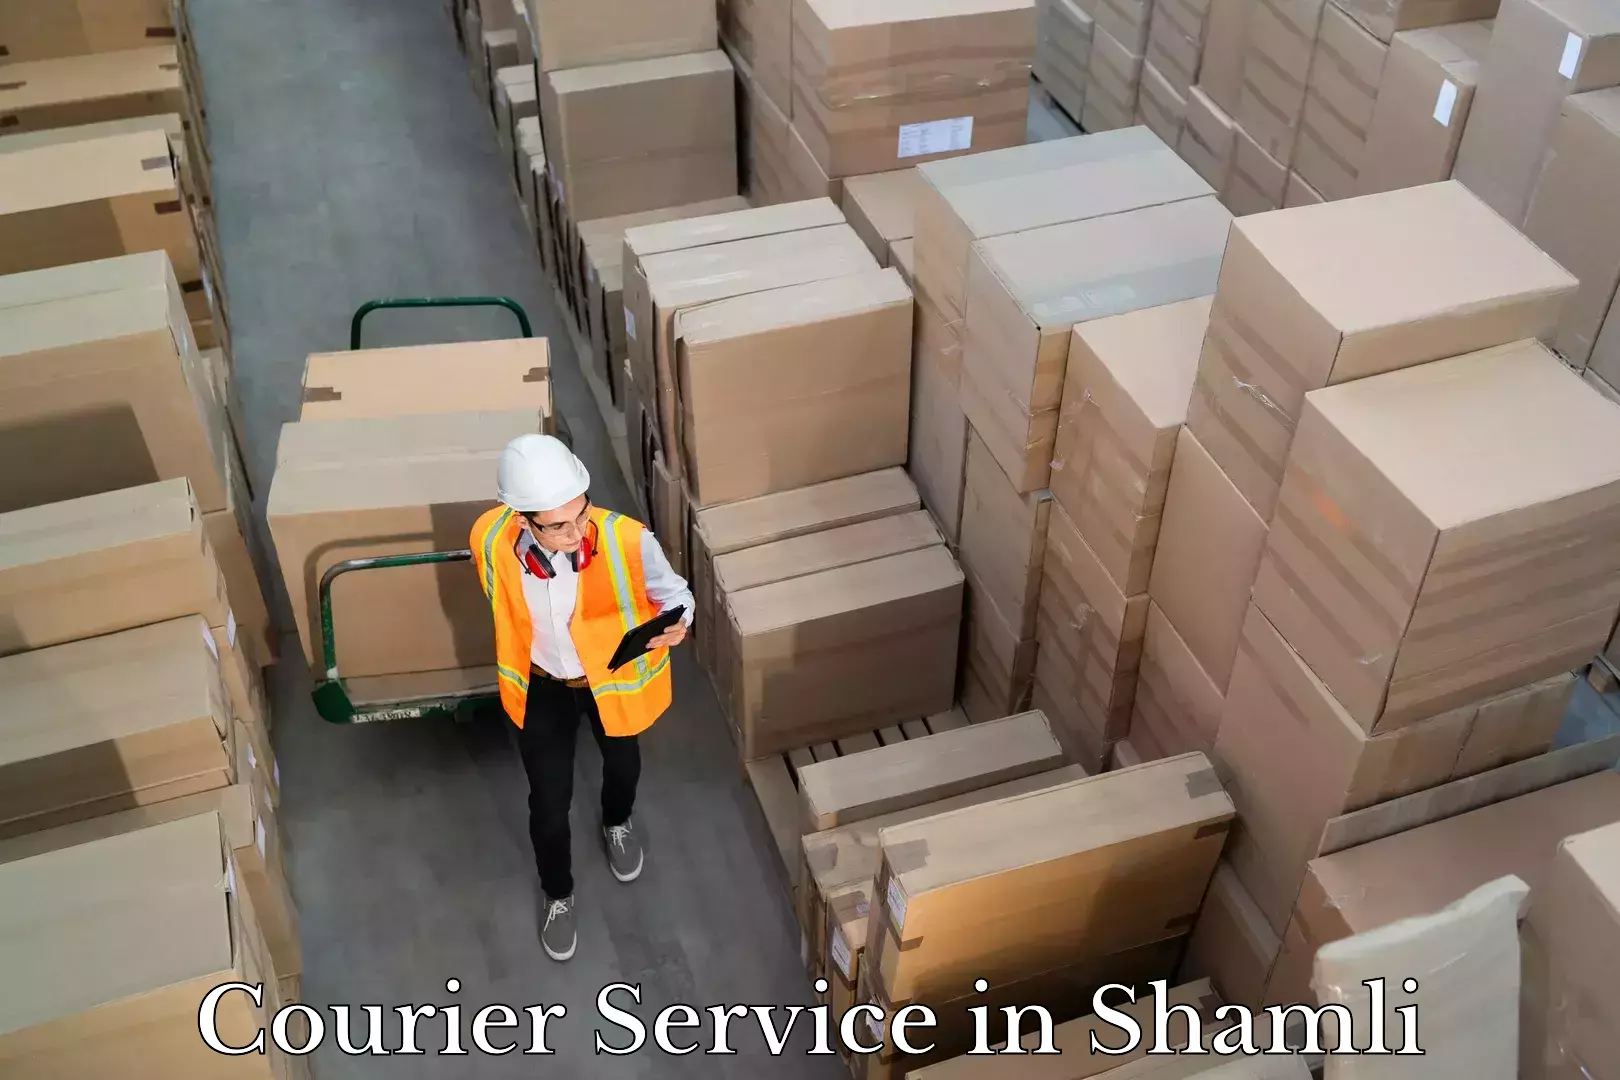 Speedy delivery service in Shamli